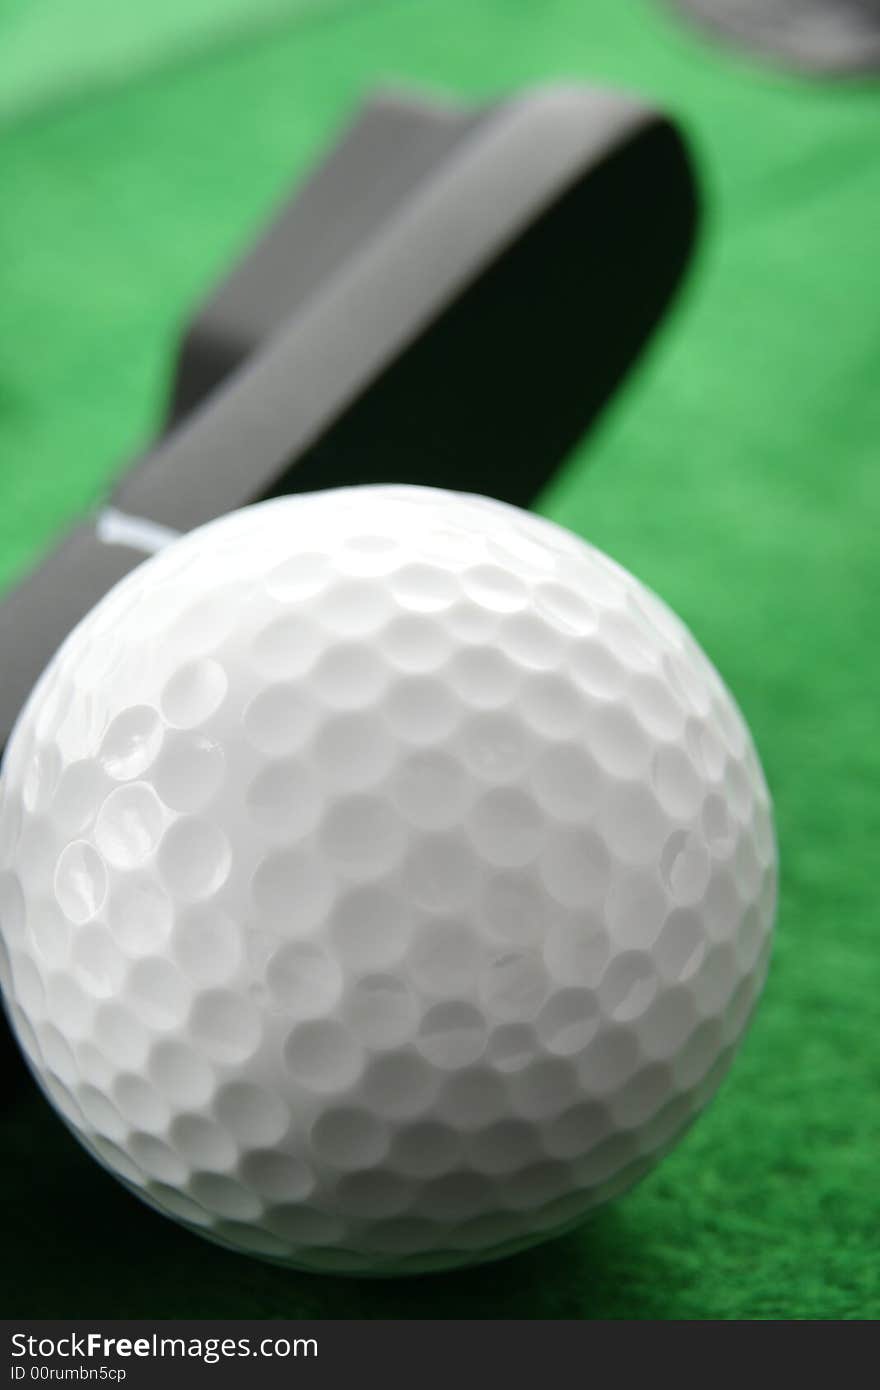 Golf ball. Iron hitting golf ball in motion